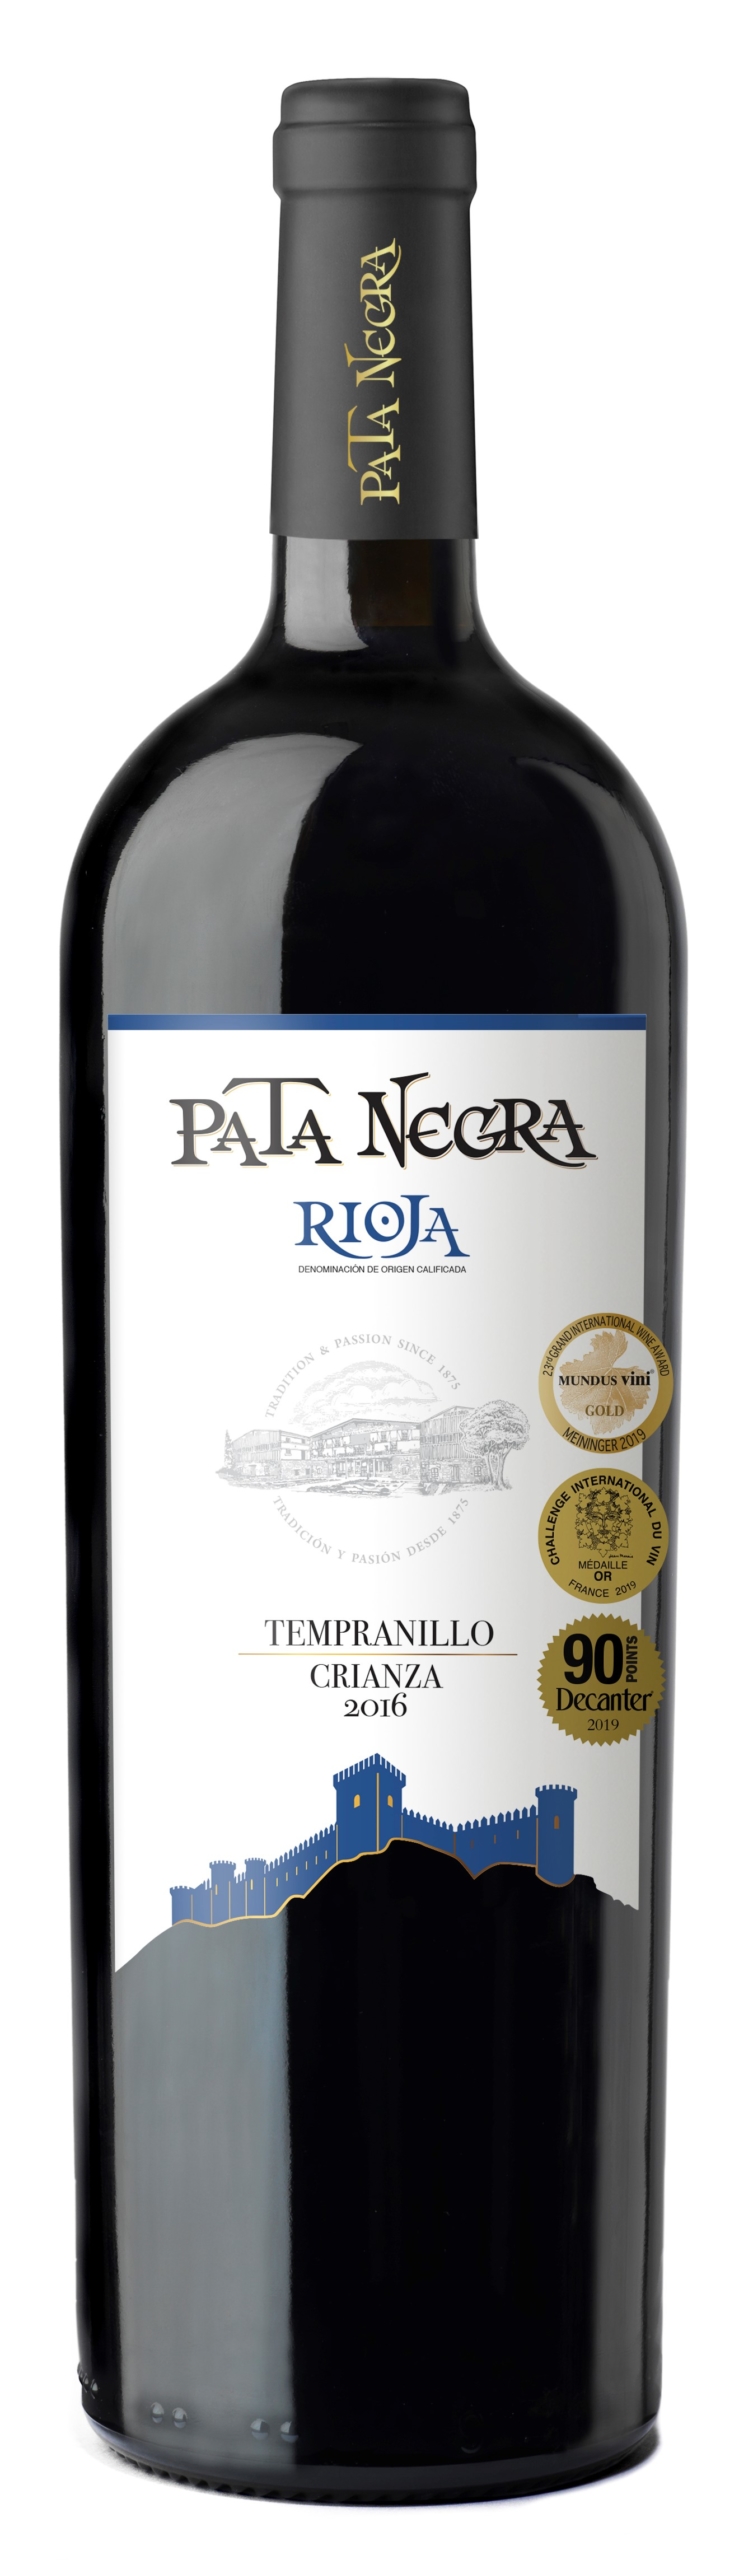 Comprar Vino Pata Negra Tinto Rioja Crianza 2010 - 750ml